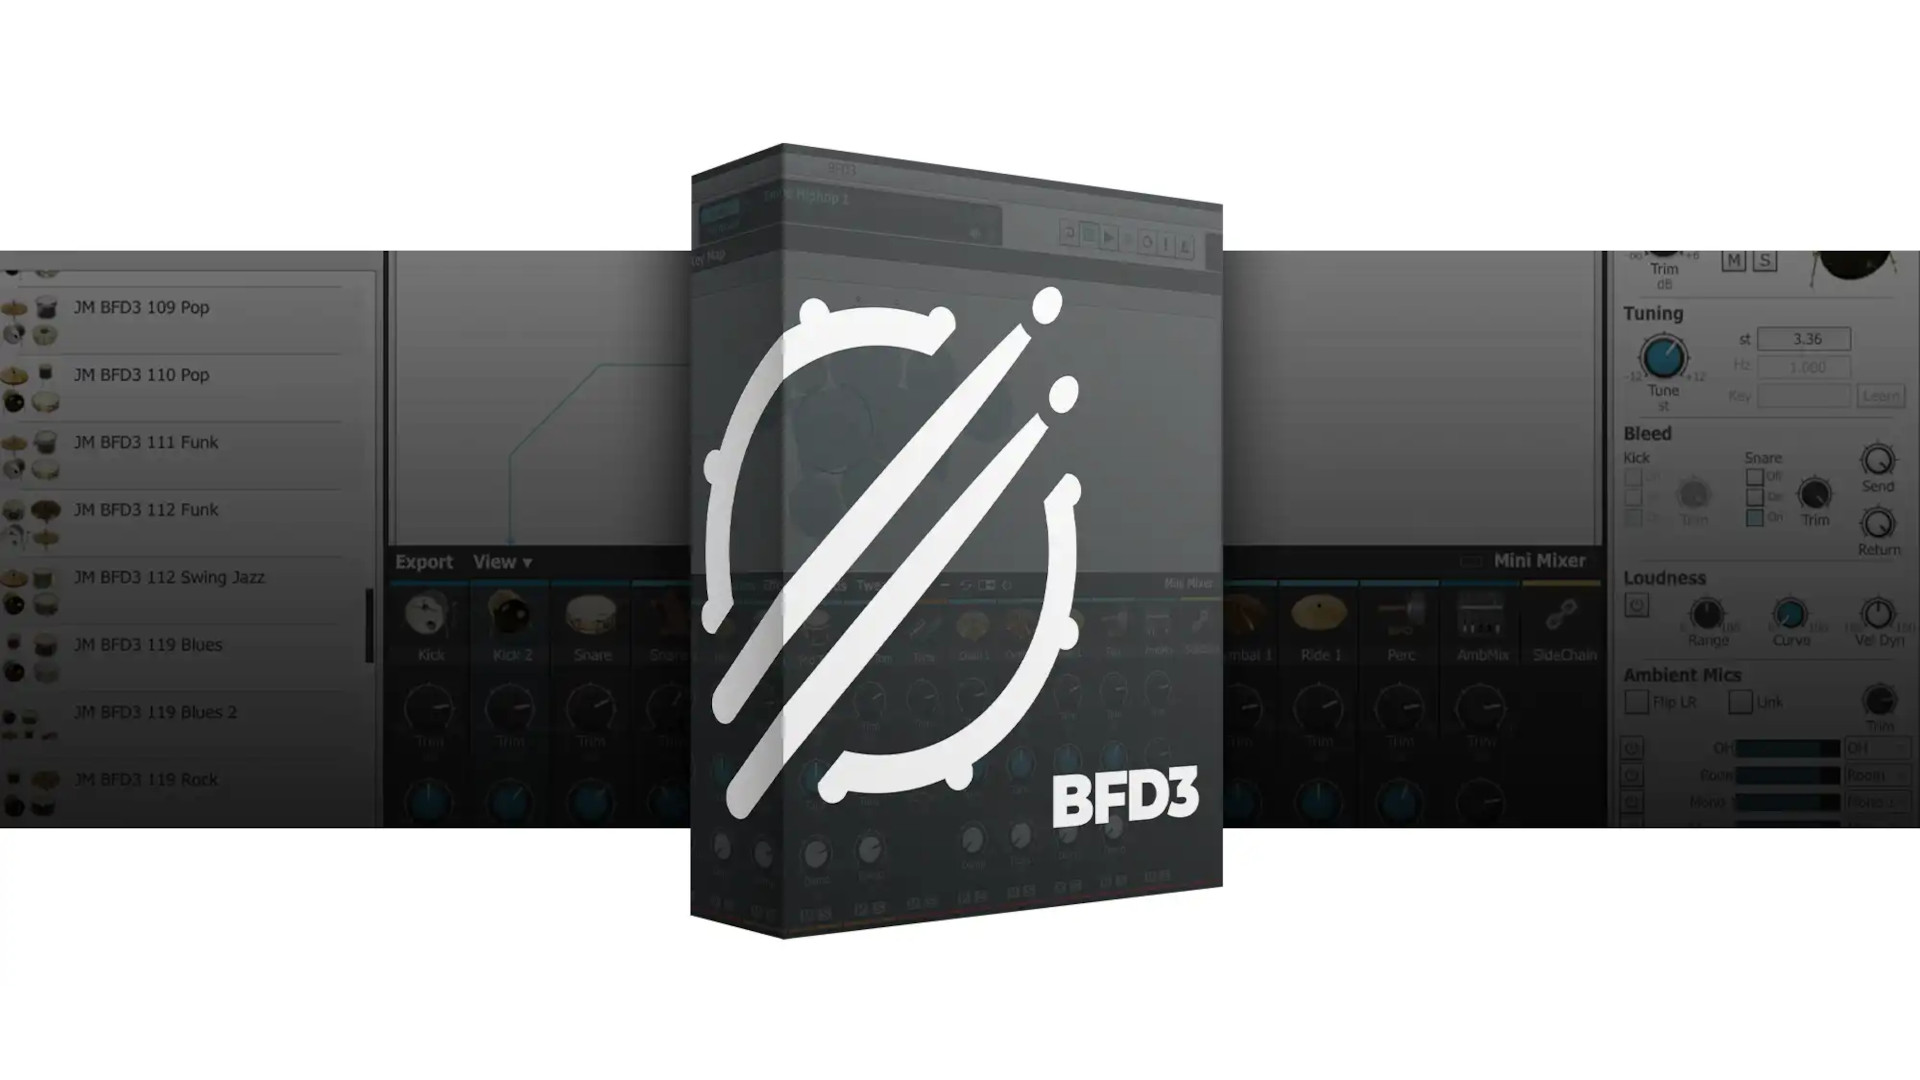 (100.57$) inmusic BFD3 PC/MAC CD Key